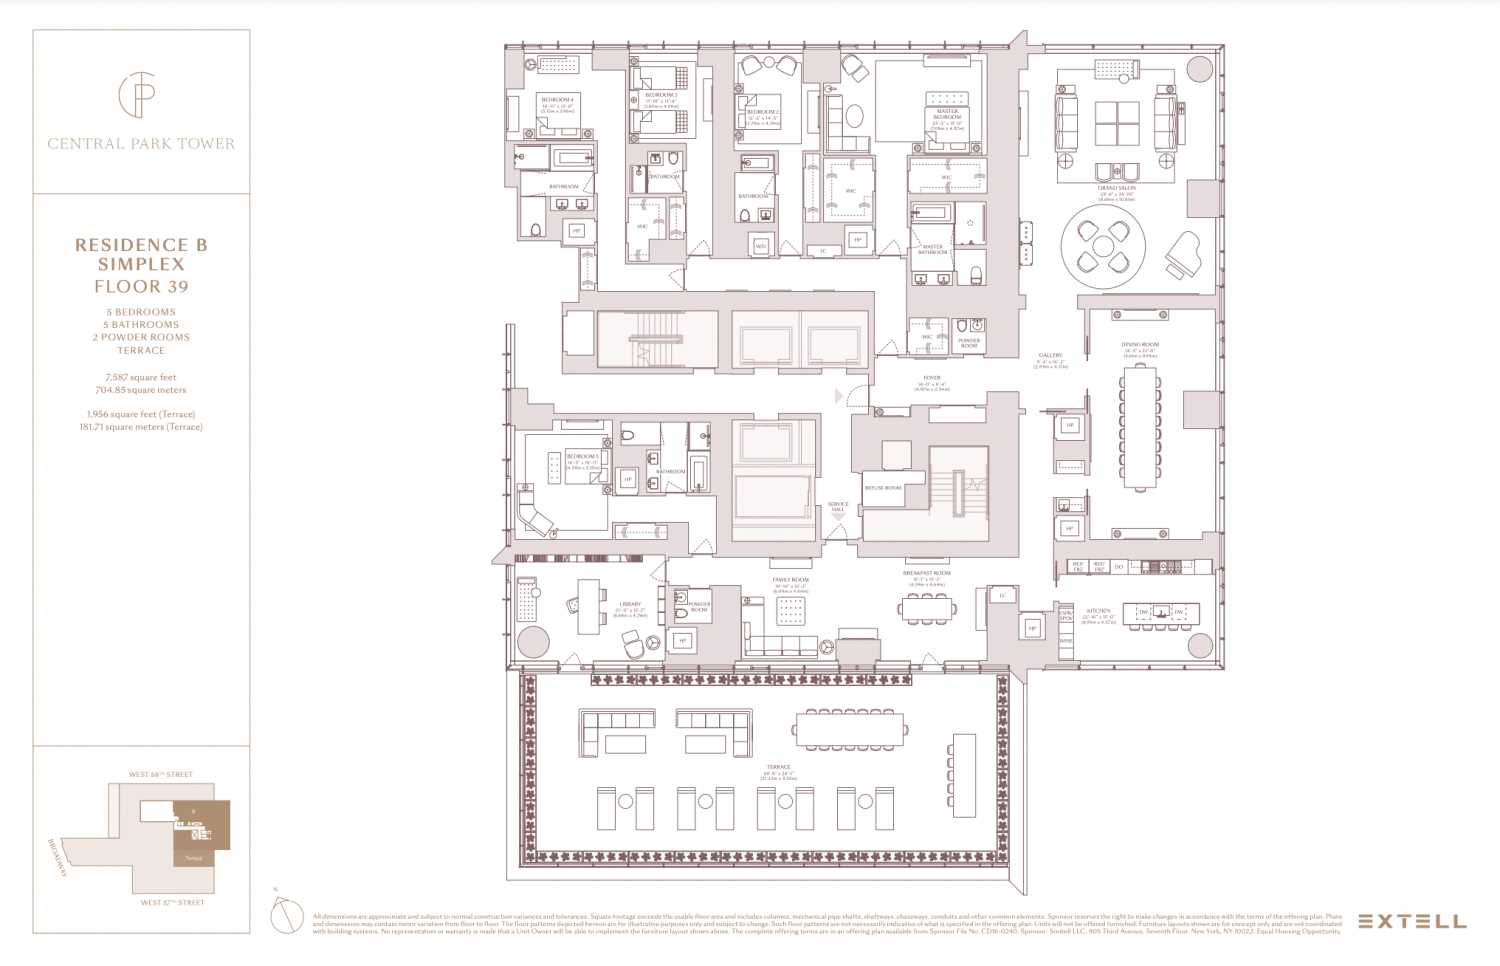 Floorplan for 217 West 57th Street, 39B